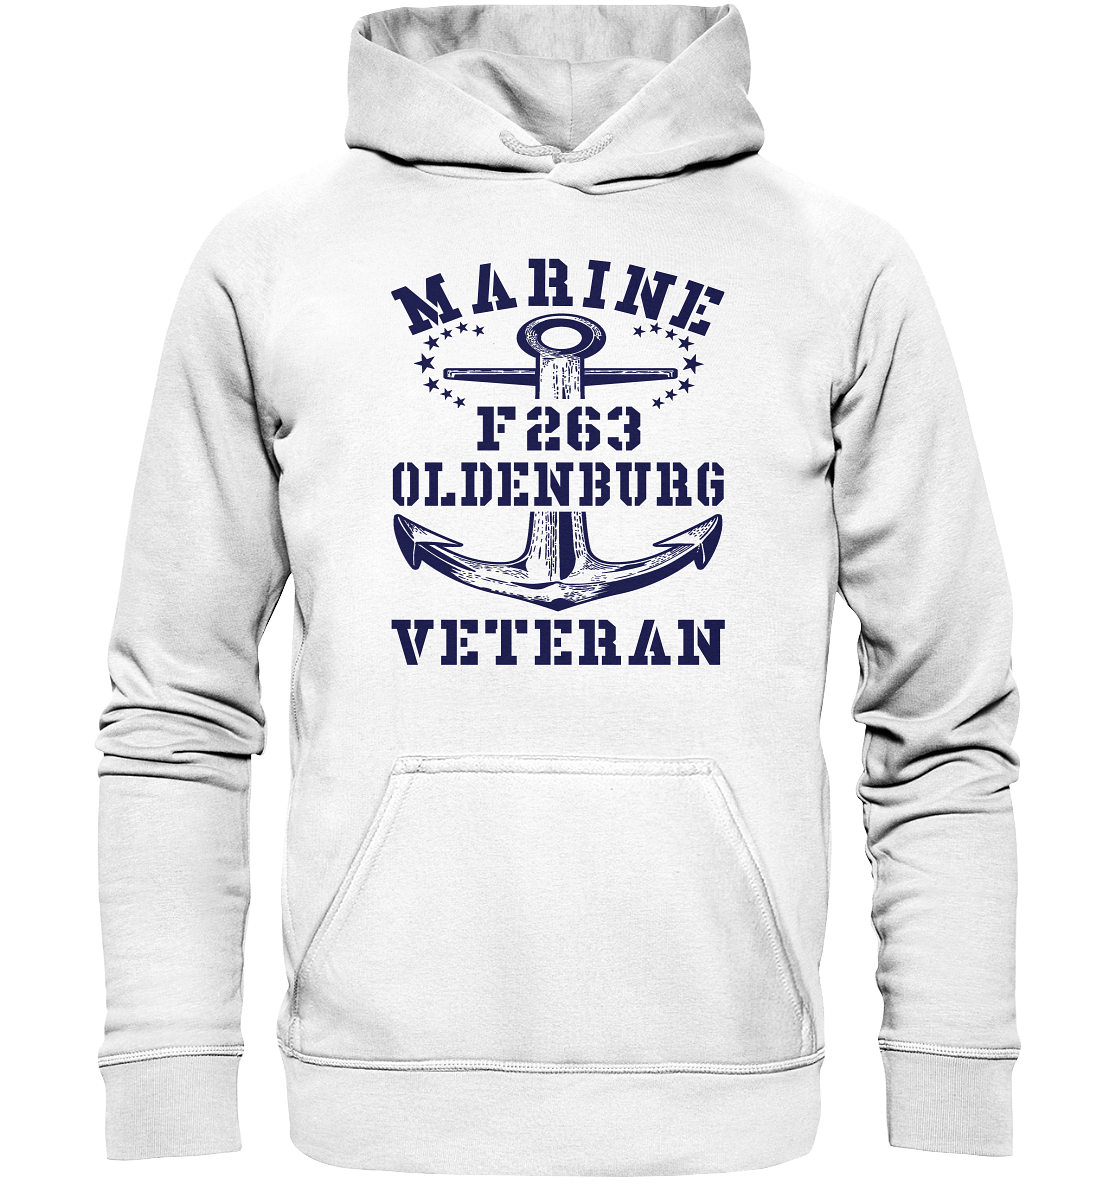 Korvette F263 OLDENBURG Marine Veteran  - Basic Unisex Hoodie